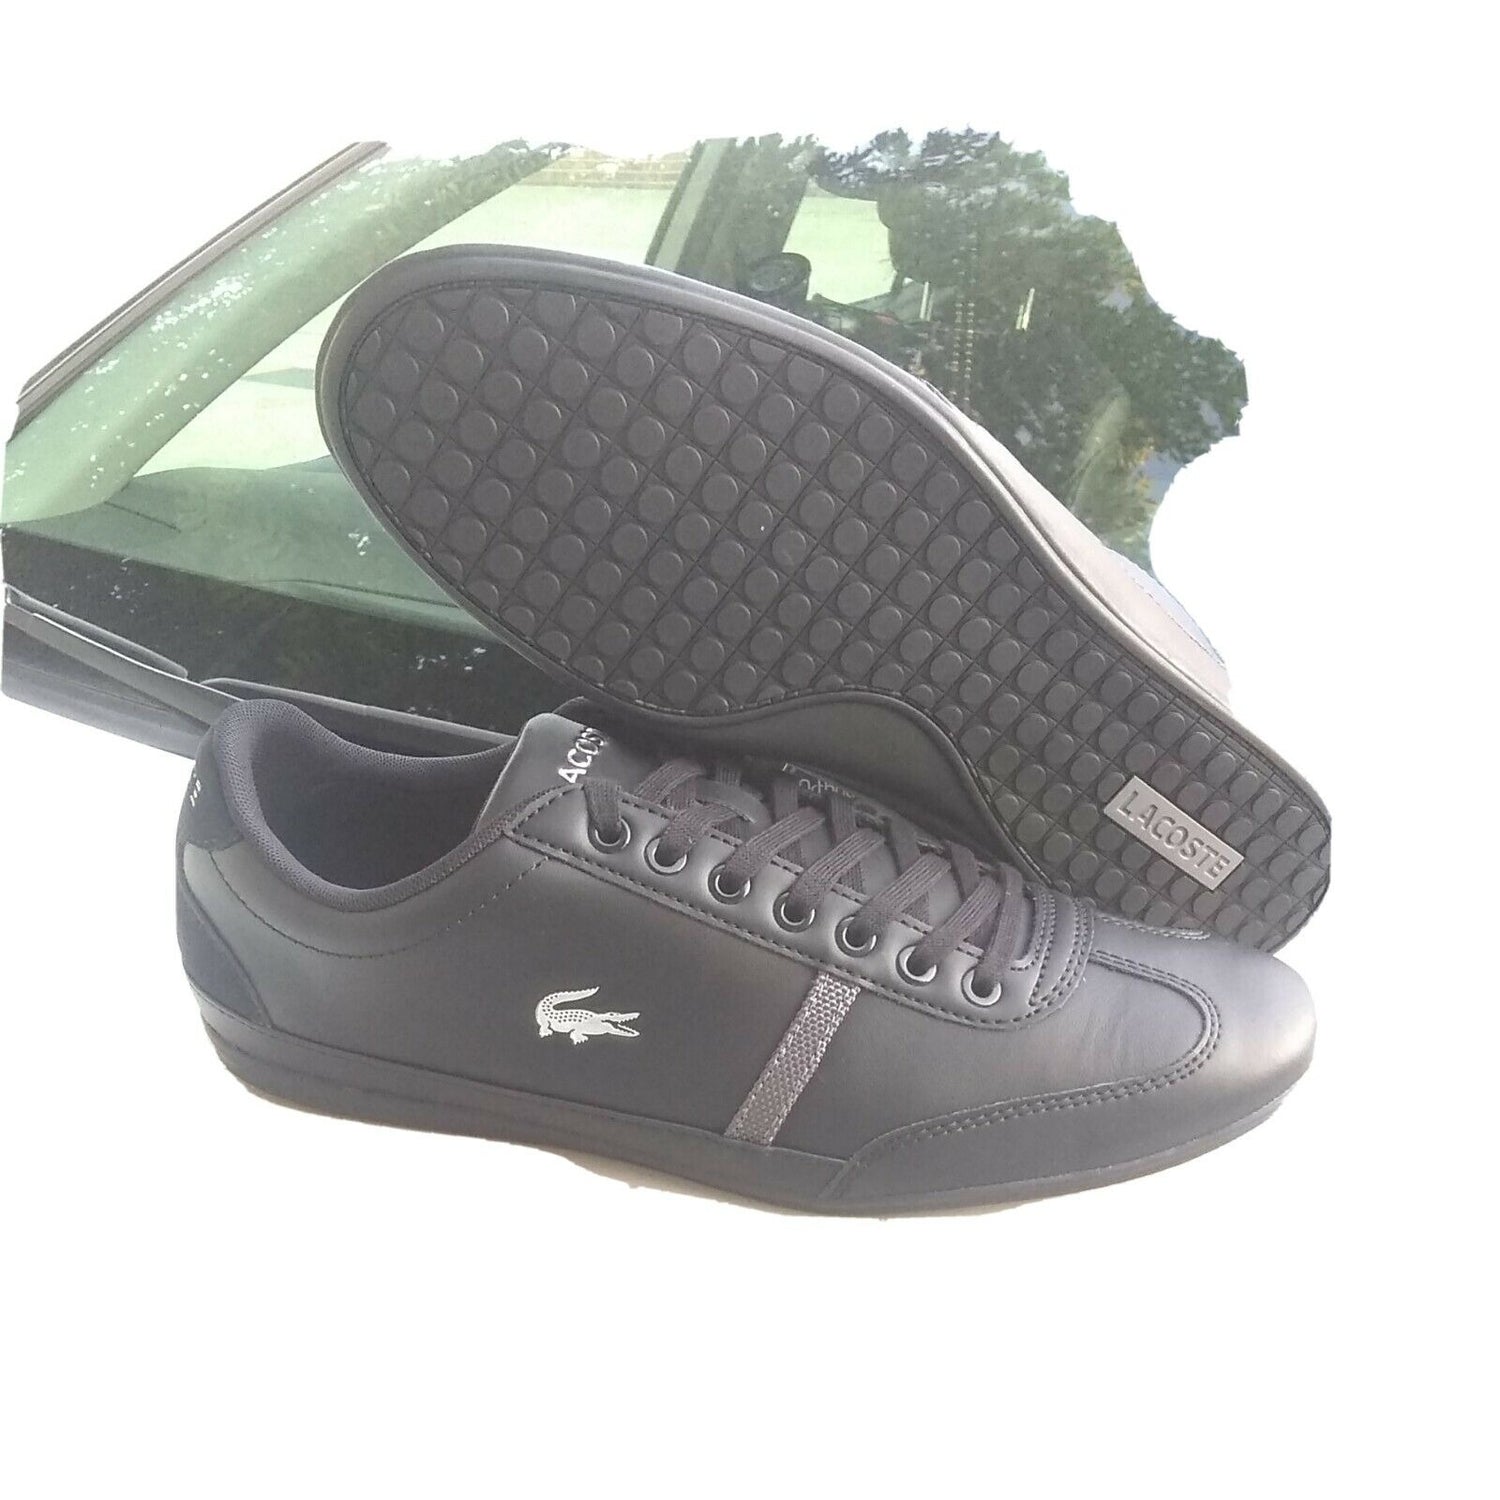 Lacoste men casual shoes 10.5 misano sport 118 1 u cam black grey